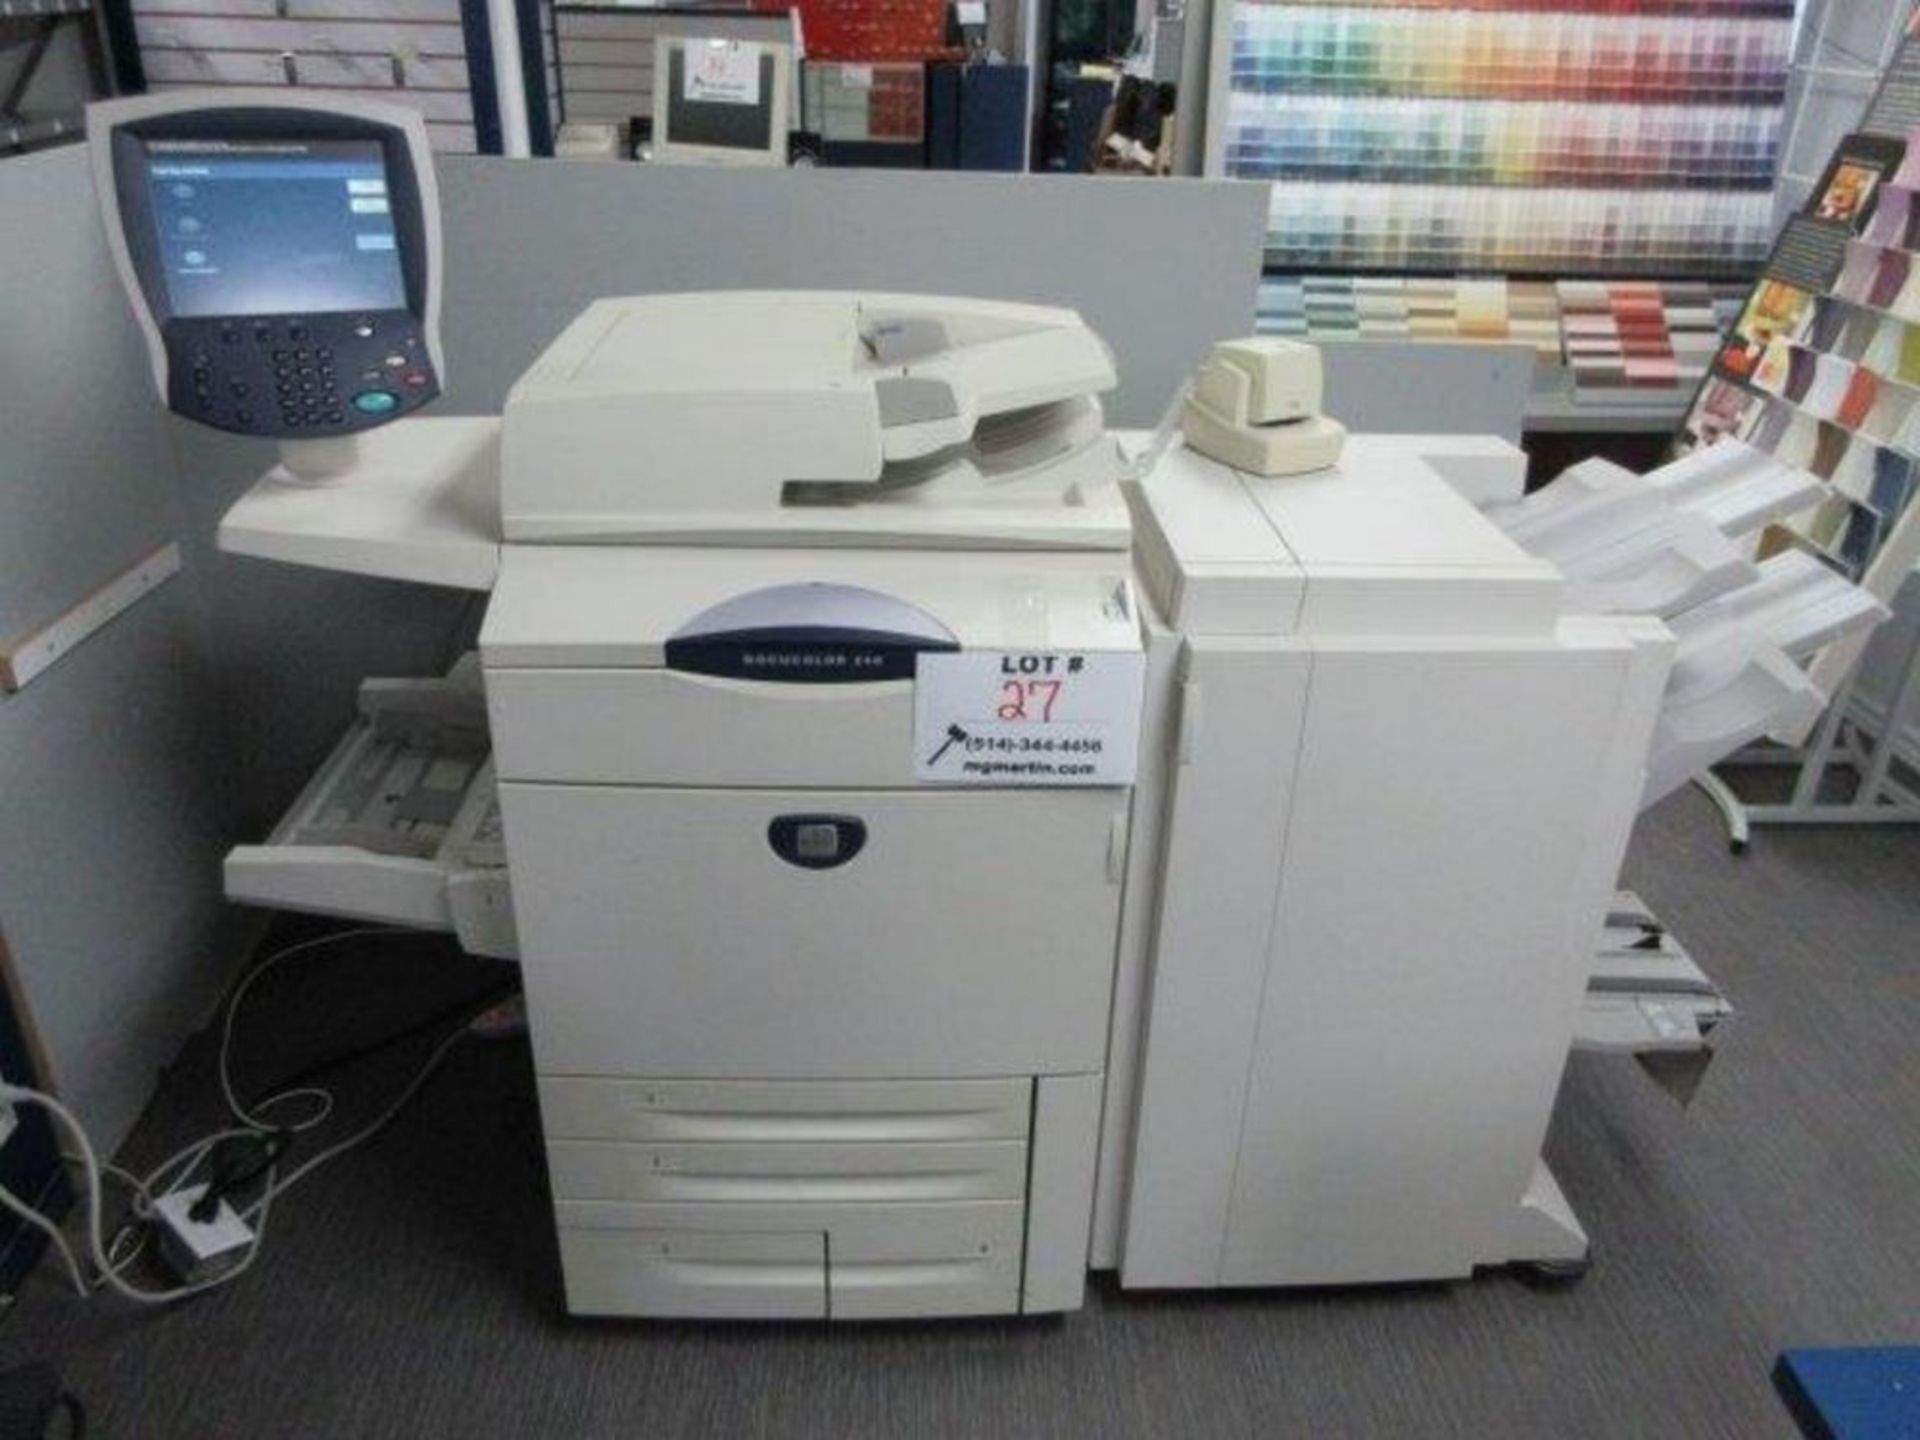 ''XEROX'' Docucolor 240 multifunction printer-copier with sorter